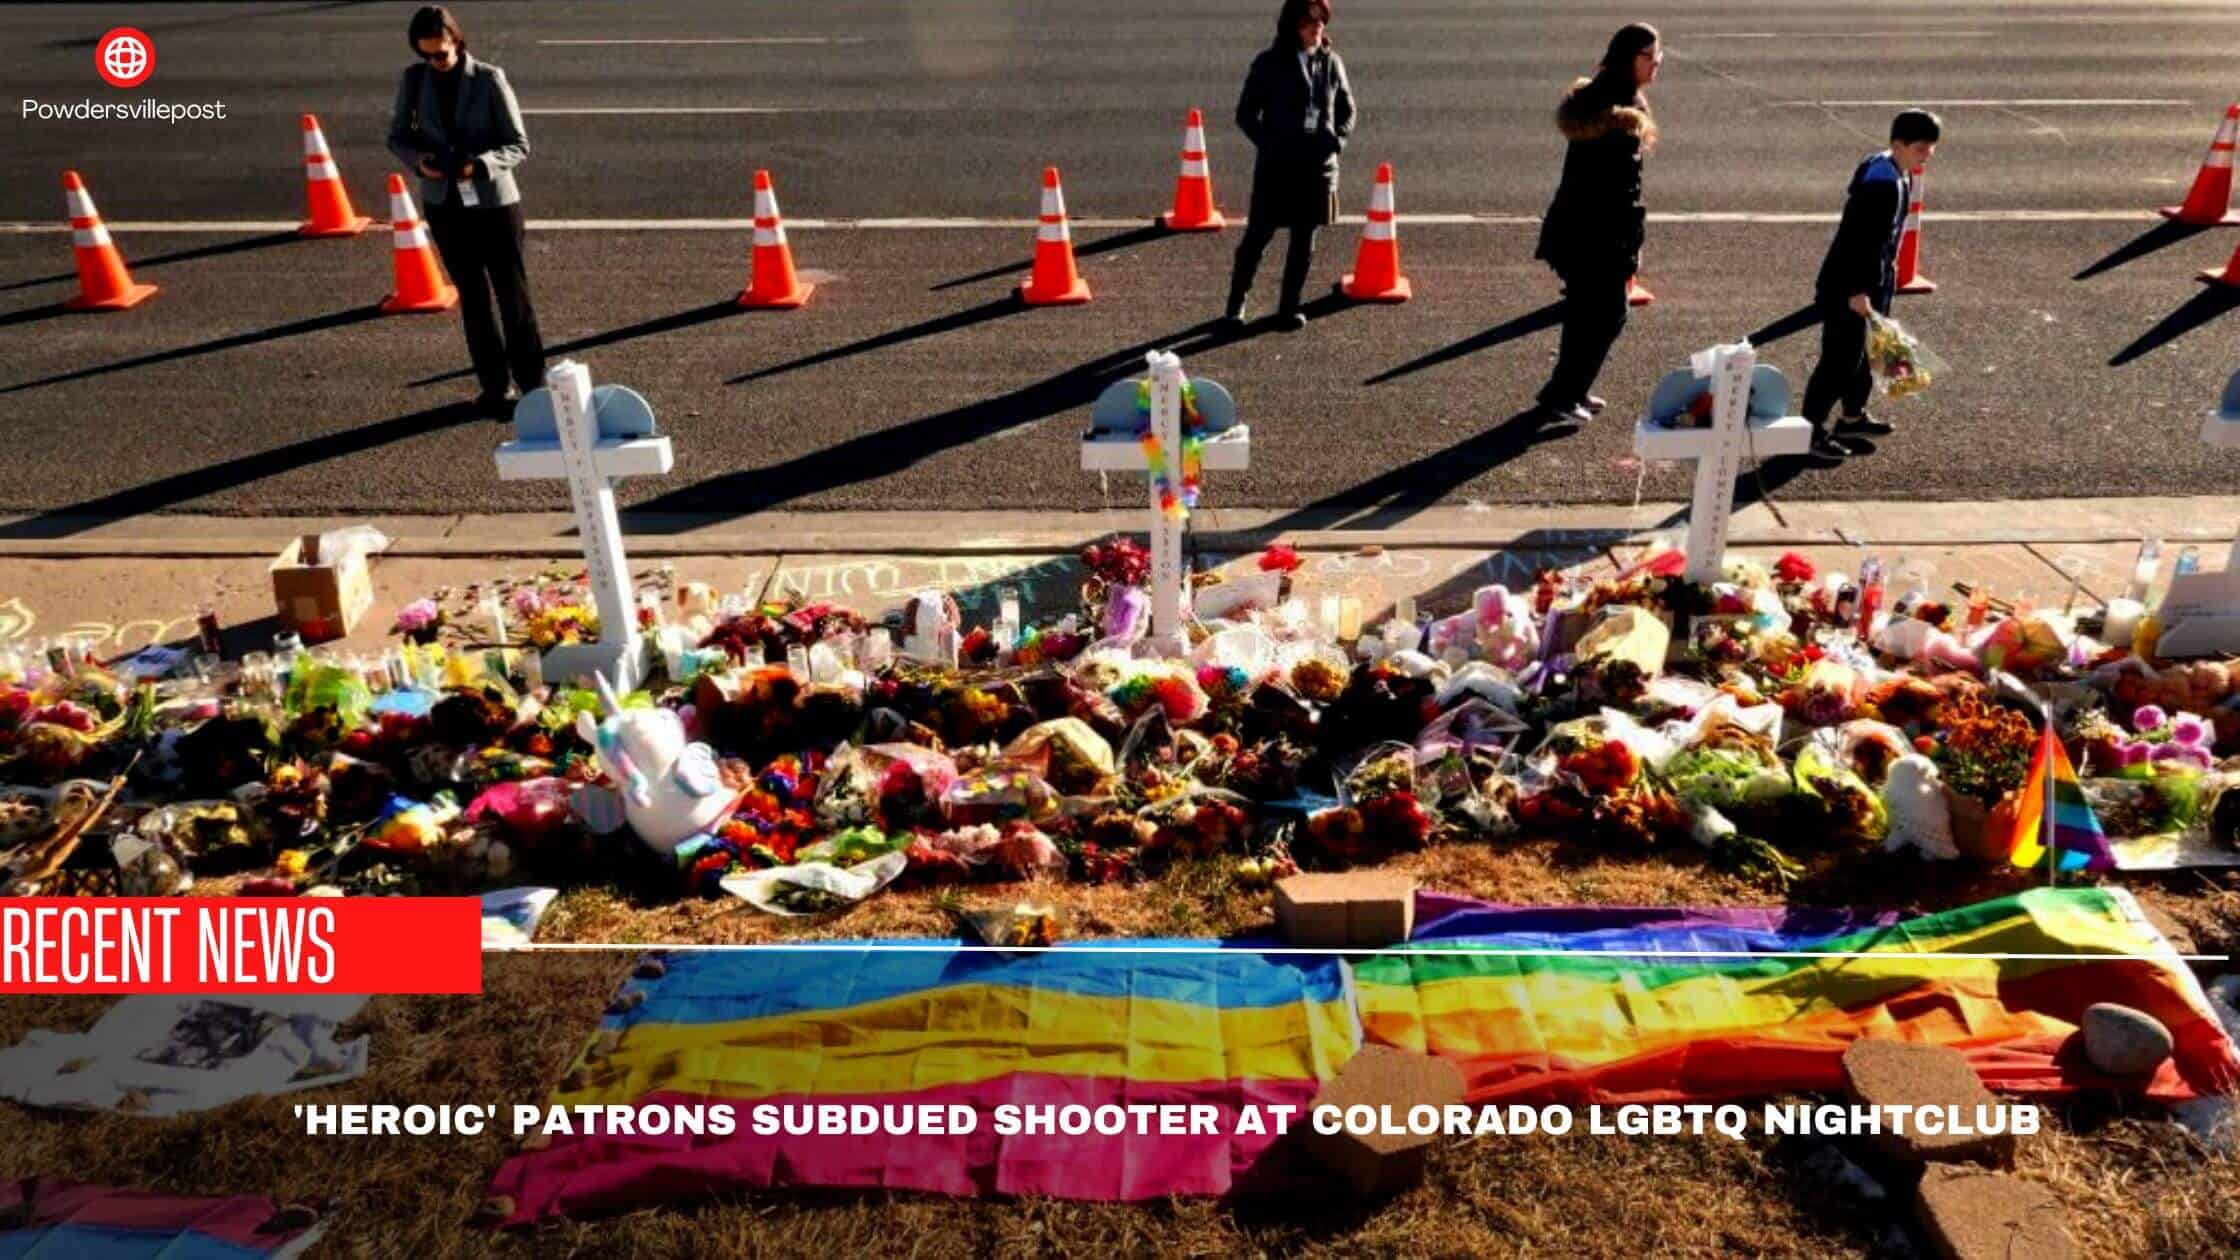 'Heroic' Patrons Subdued Shooter At Colorado LGBTQ Nightclub